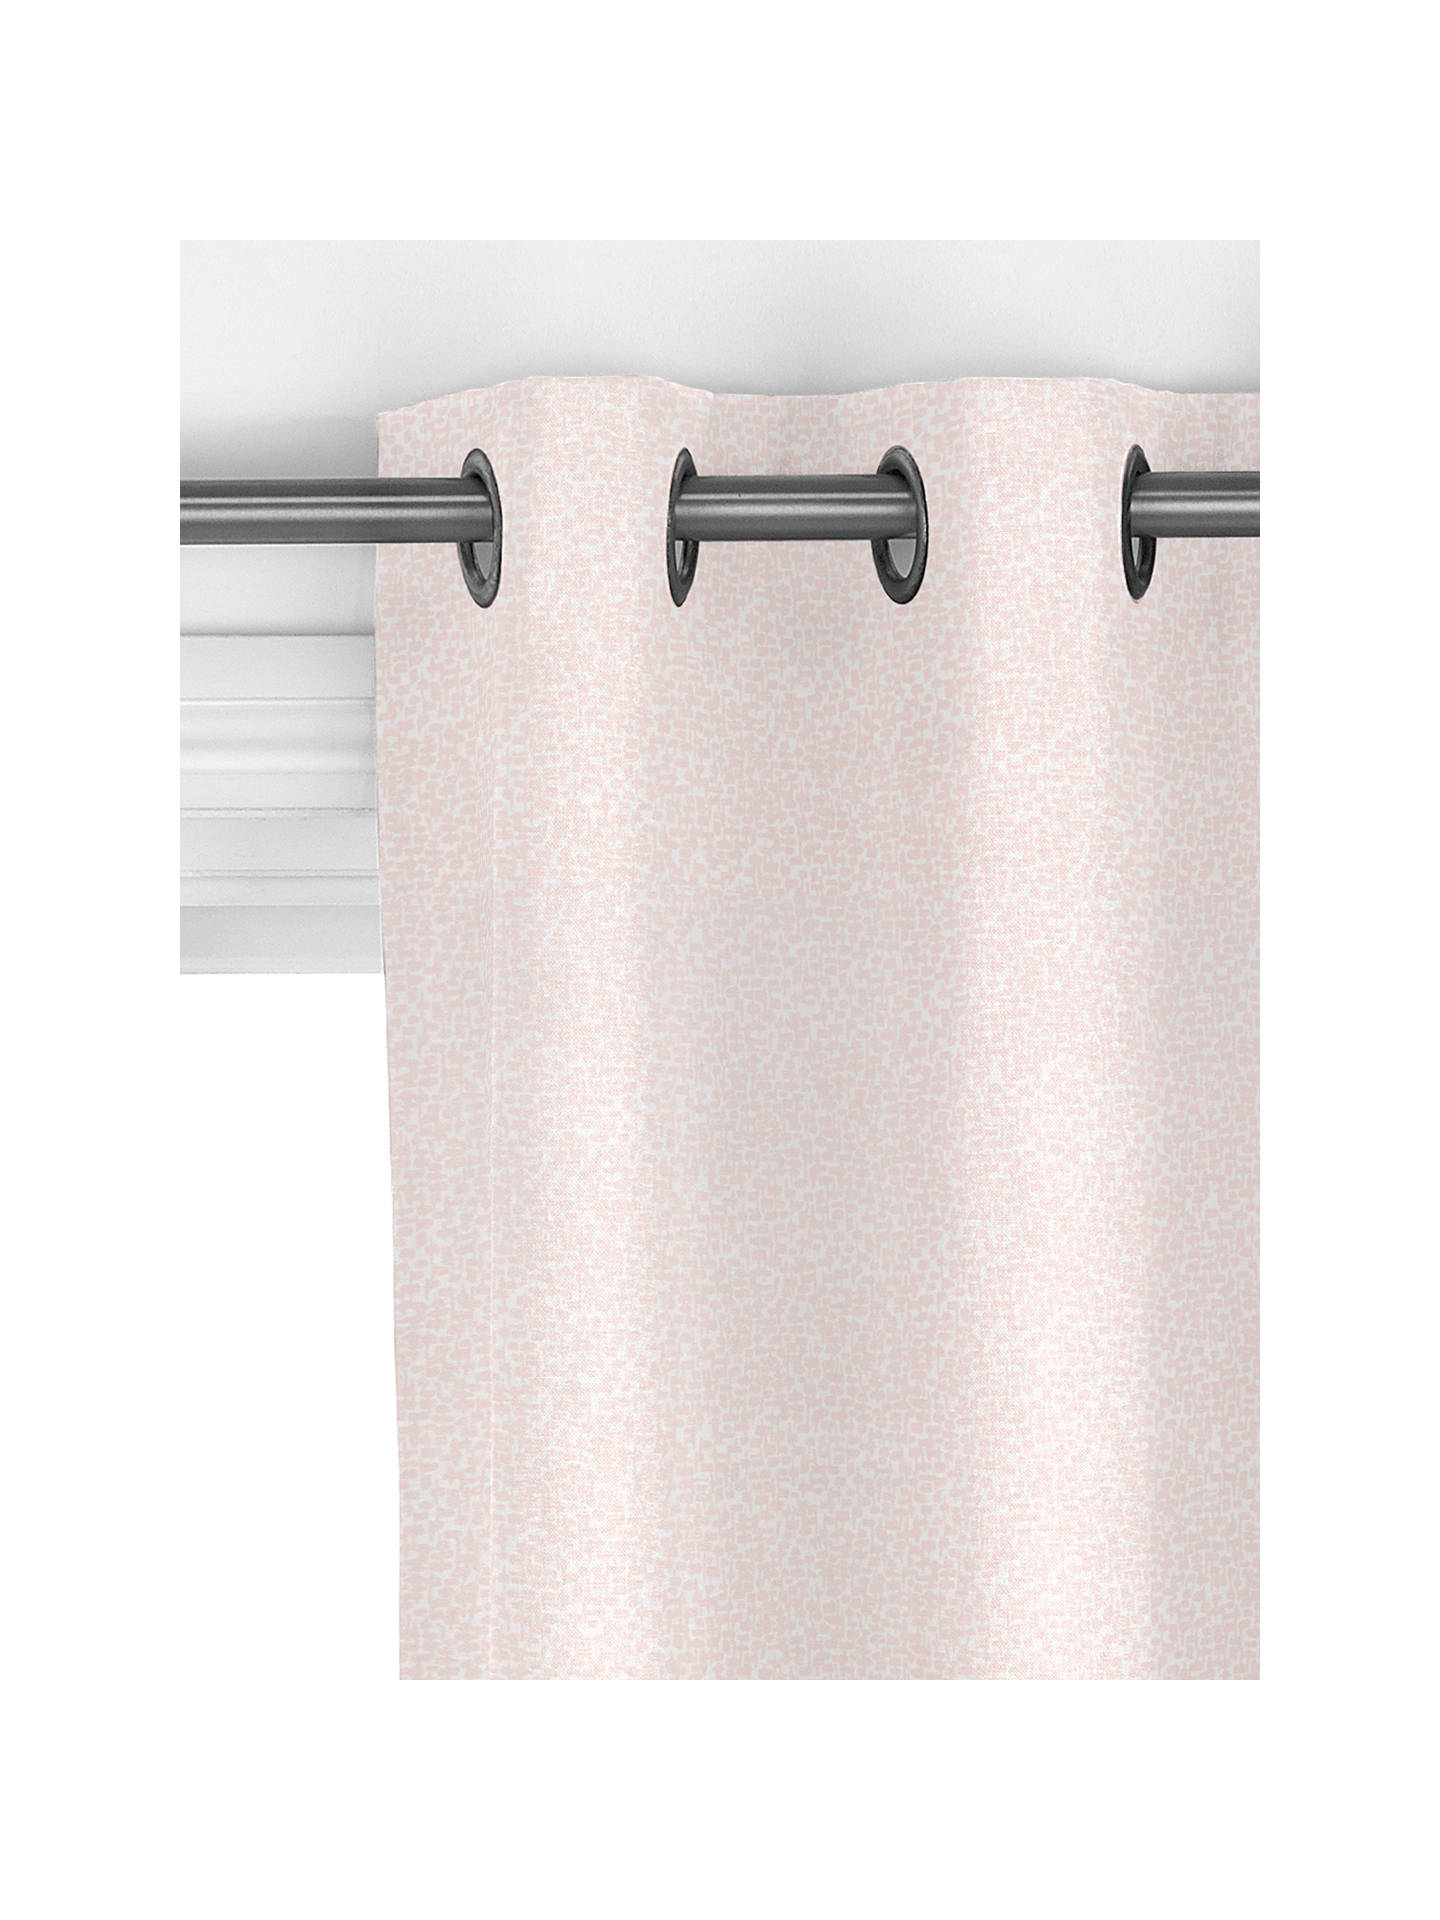 John Lewis Yin Made to Measure Curtains, Soft Pink